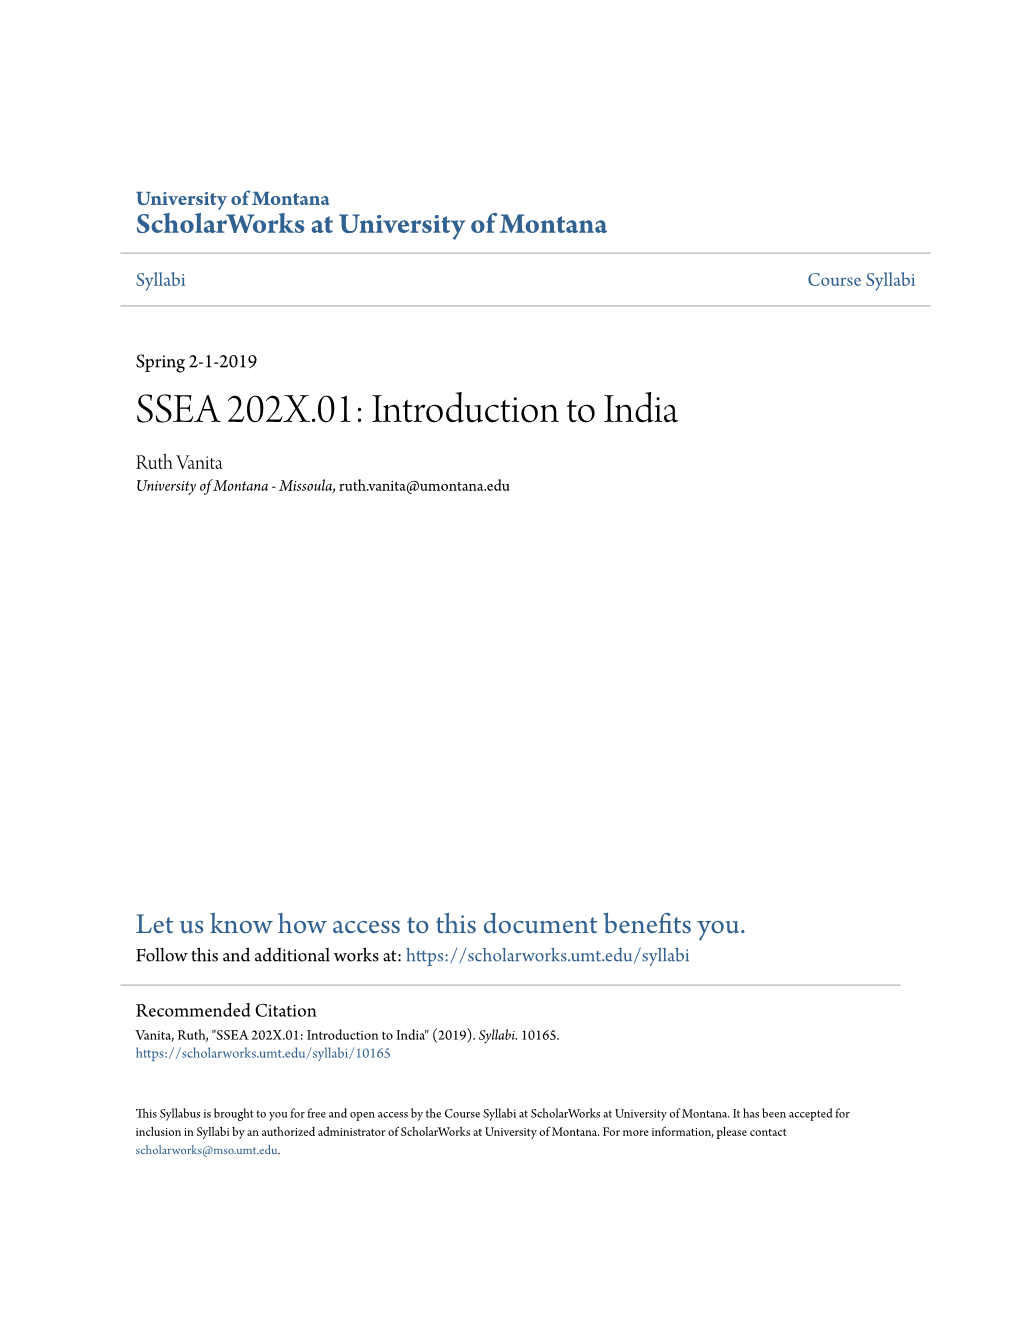 SSEA 202X.01: Introduction to India Ruth Vanita University of Montana - Missoula, Ruth.Vanita@Umontana.Edu